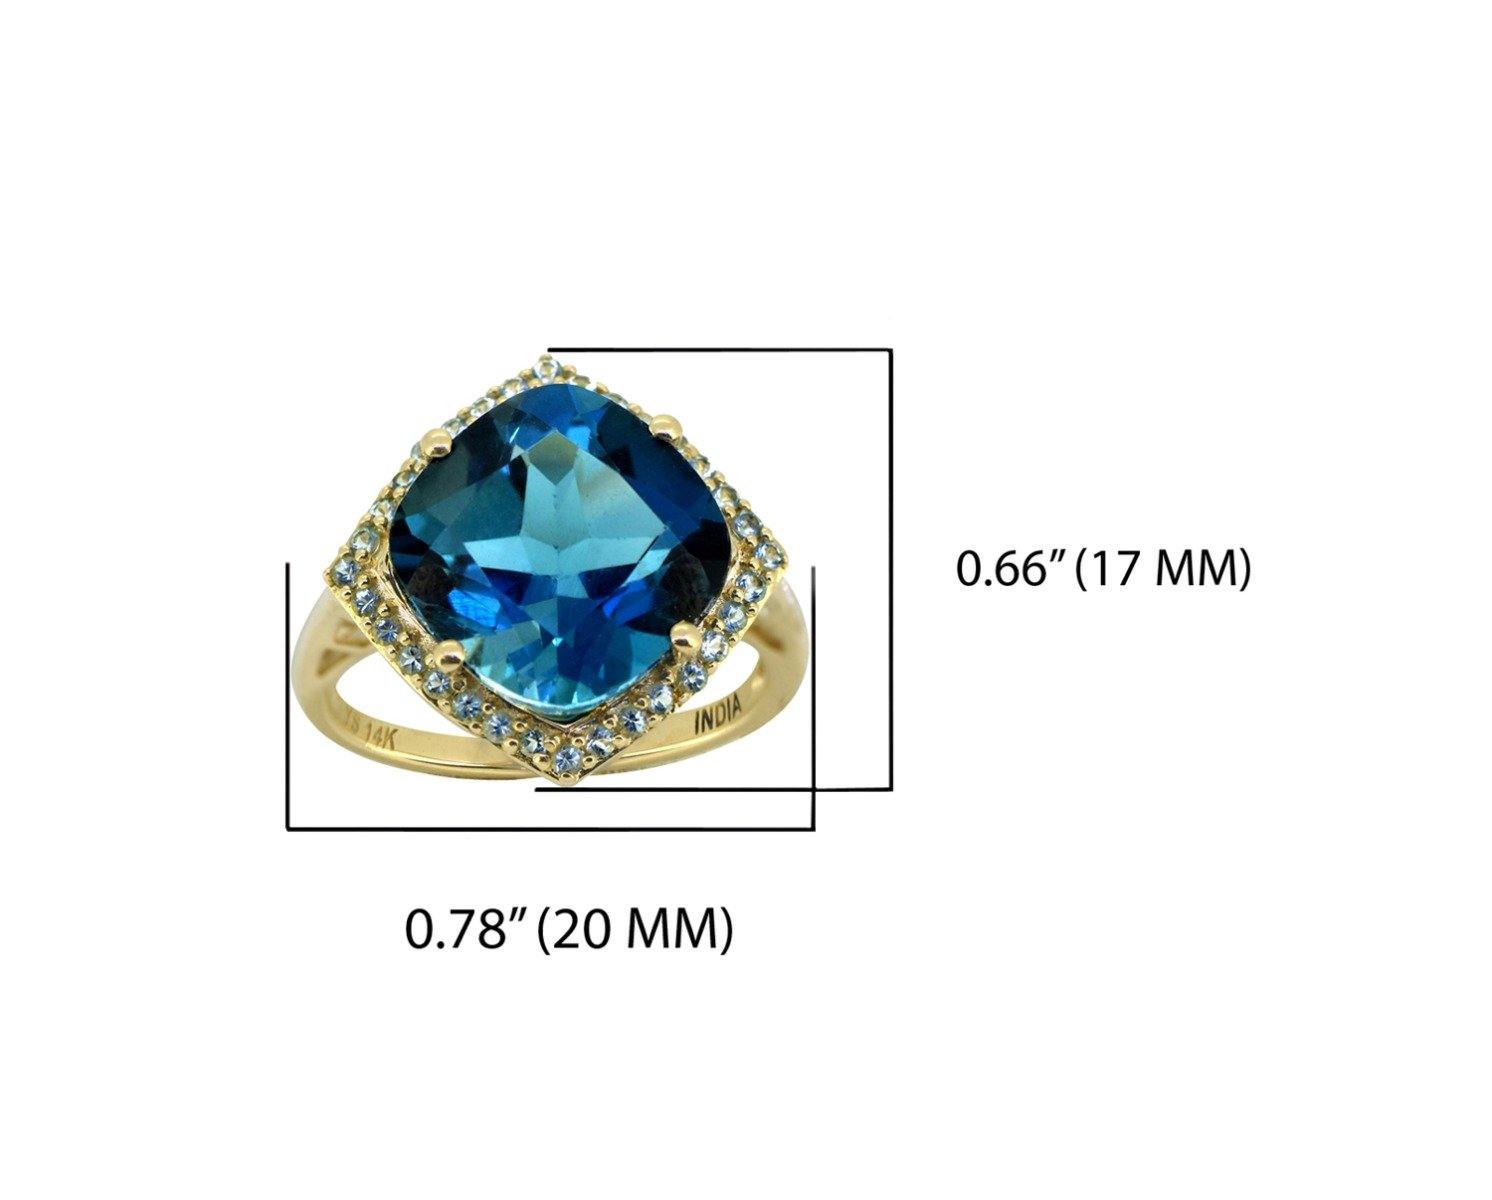 7.17 Ct London Blue Topaz Solid 14k Yellow Gold Ring Jewelry - YoTreasure